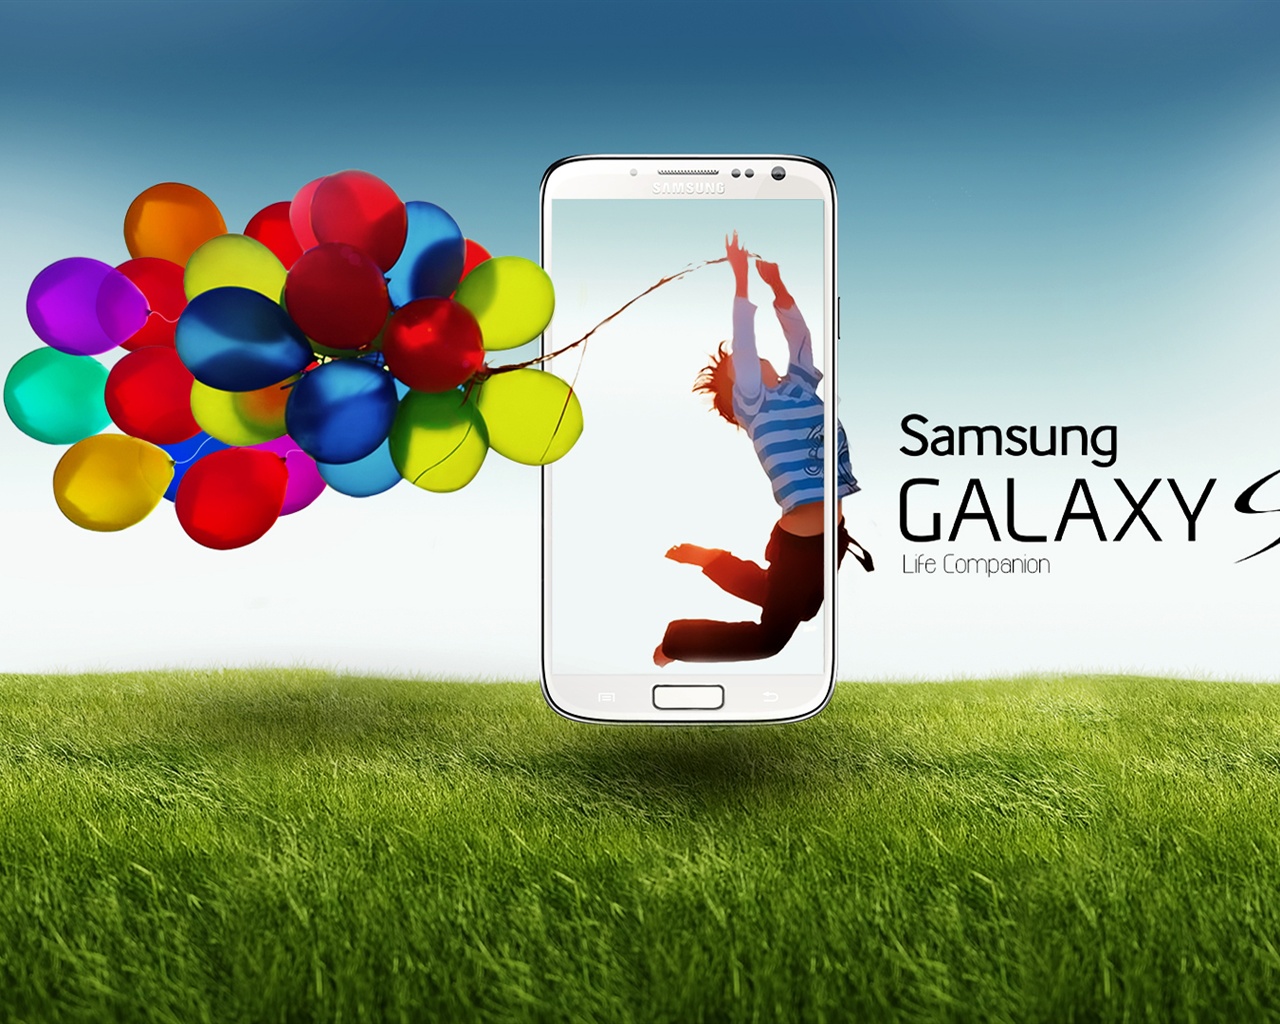 Samsung Galaxy S4 Life Companion - 1280x1024 Wallpaper 